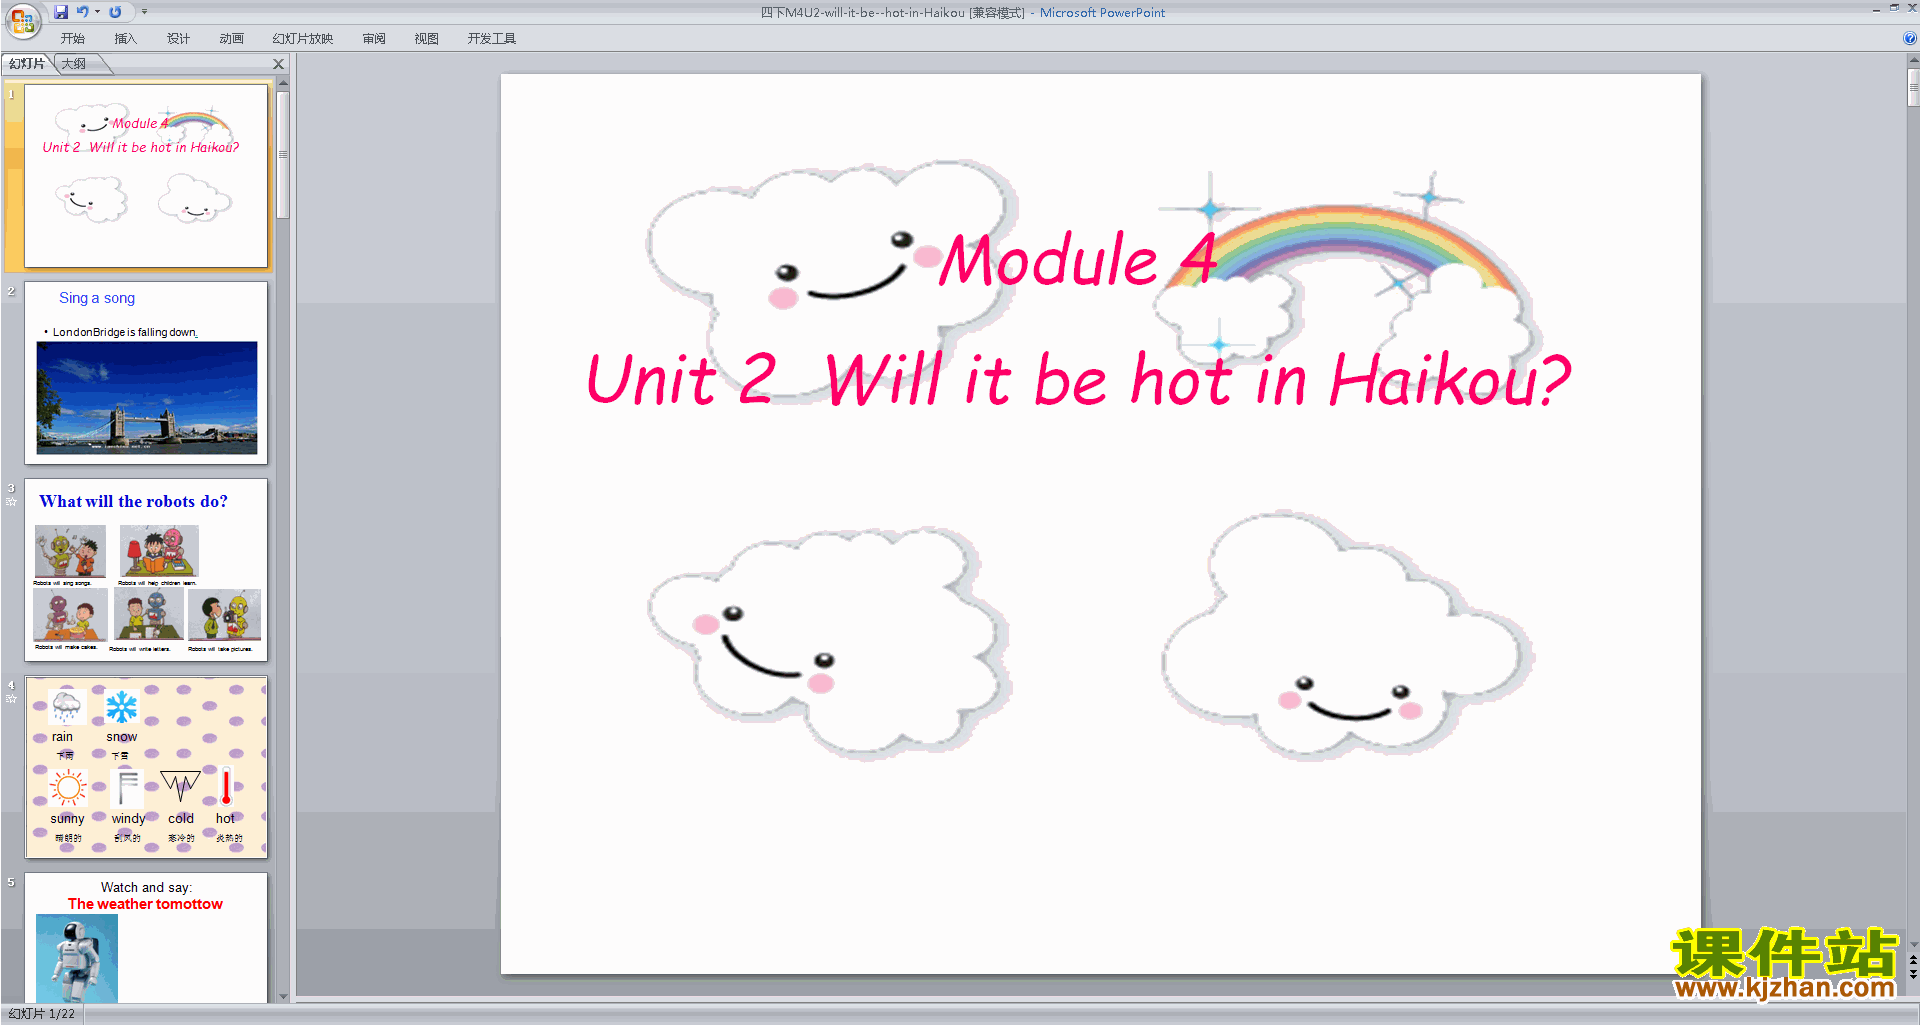 Unit2 Will it be hot in Haikoupptμ